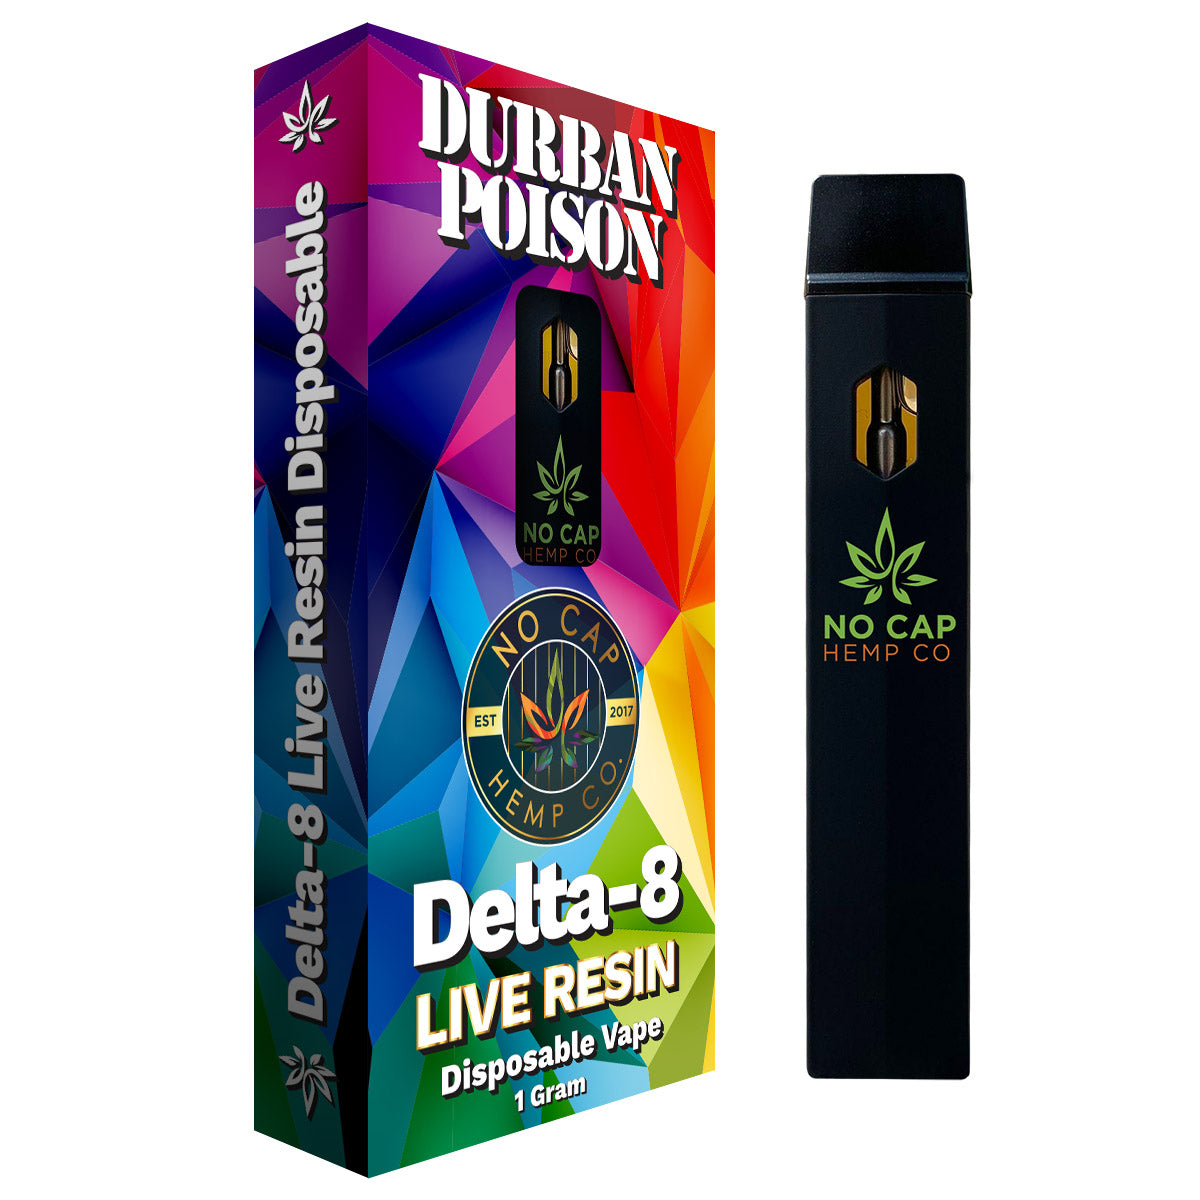 No Cap Hemp Co Sativa Delta 8 THC Live Resin Disposable “Durban Poison” yoga, yoga smokes, smoke shop near me, liquid smoke, port saint lucie, florida, port st lucie, smoke shop, lounge, smoke lounge, stoner, smoke, high, life, highlife, love, stoned, highsociety. Yoga Smokes No Cap Hemp Co Sativa Delta 8 THC Live Resin Disposable “Durban Poison”